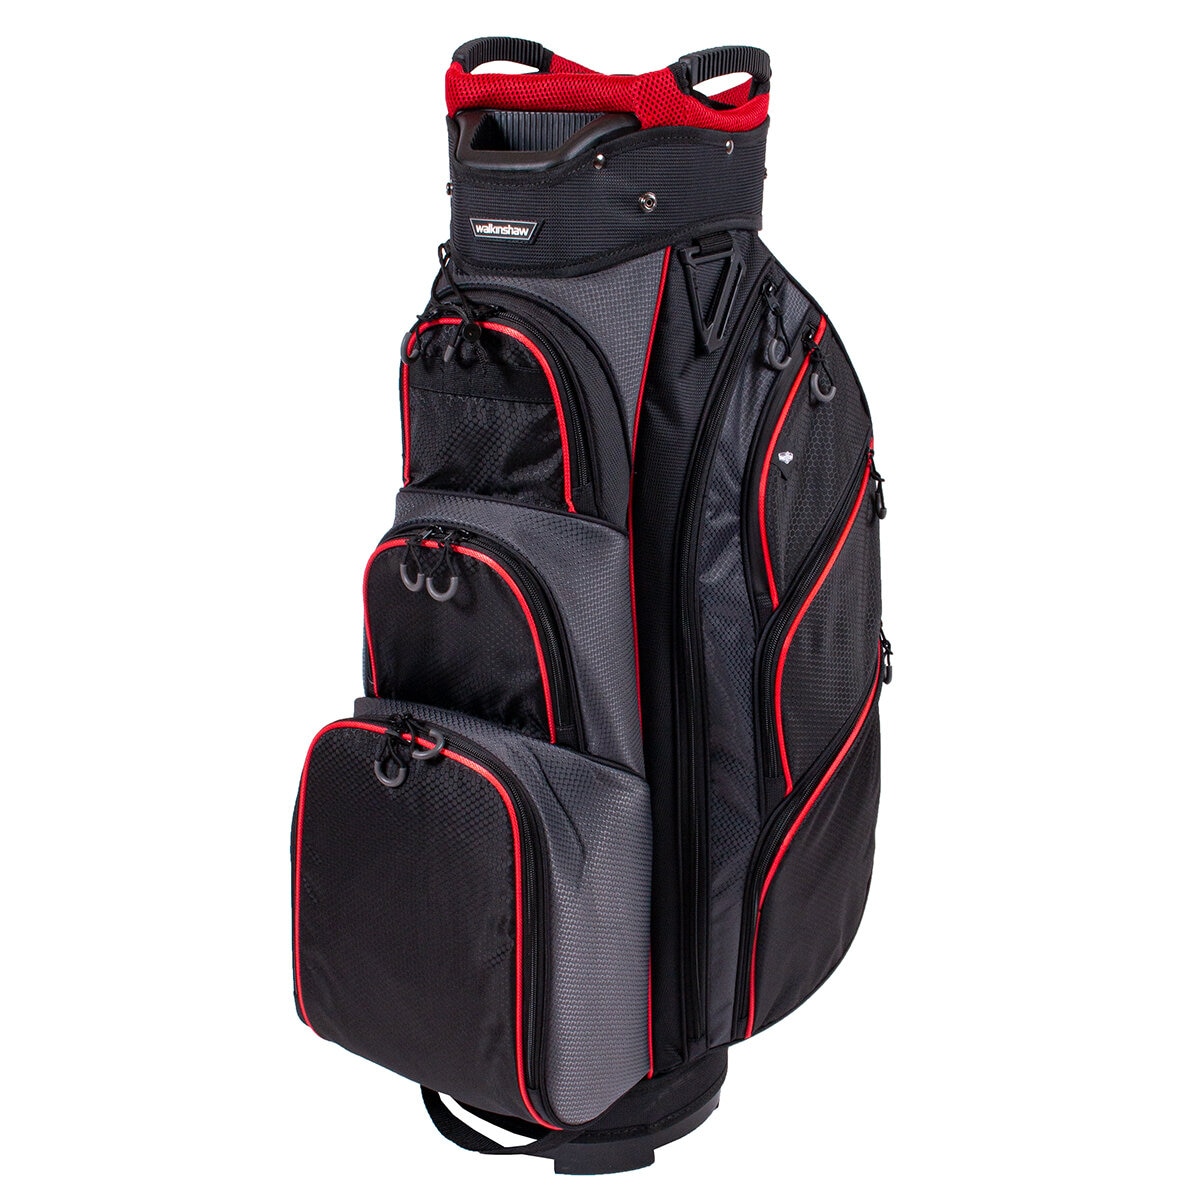 Walkinshaw Velocity 2 Golf Bag Black/Charcoal/Red